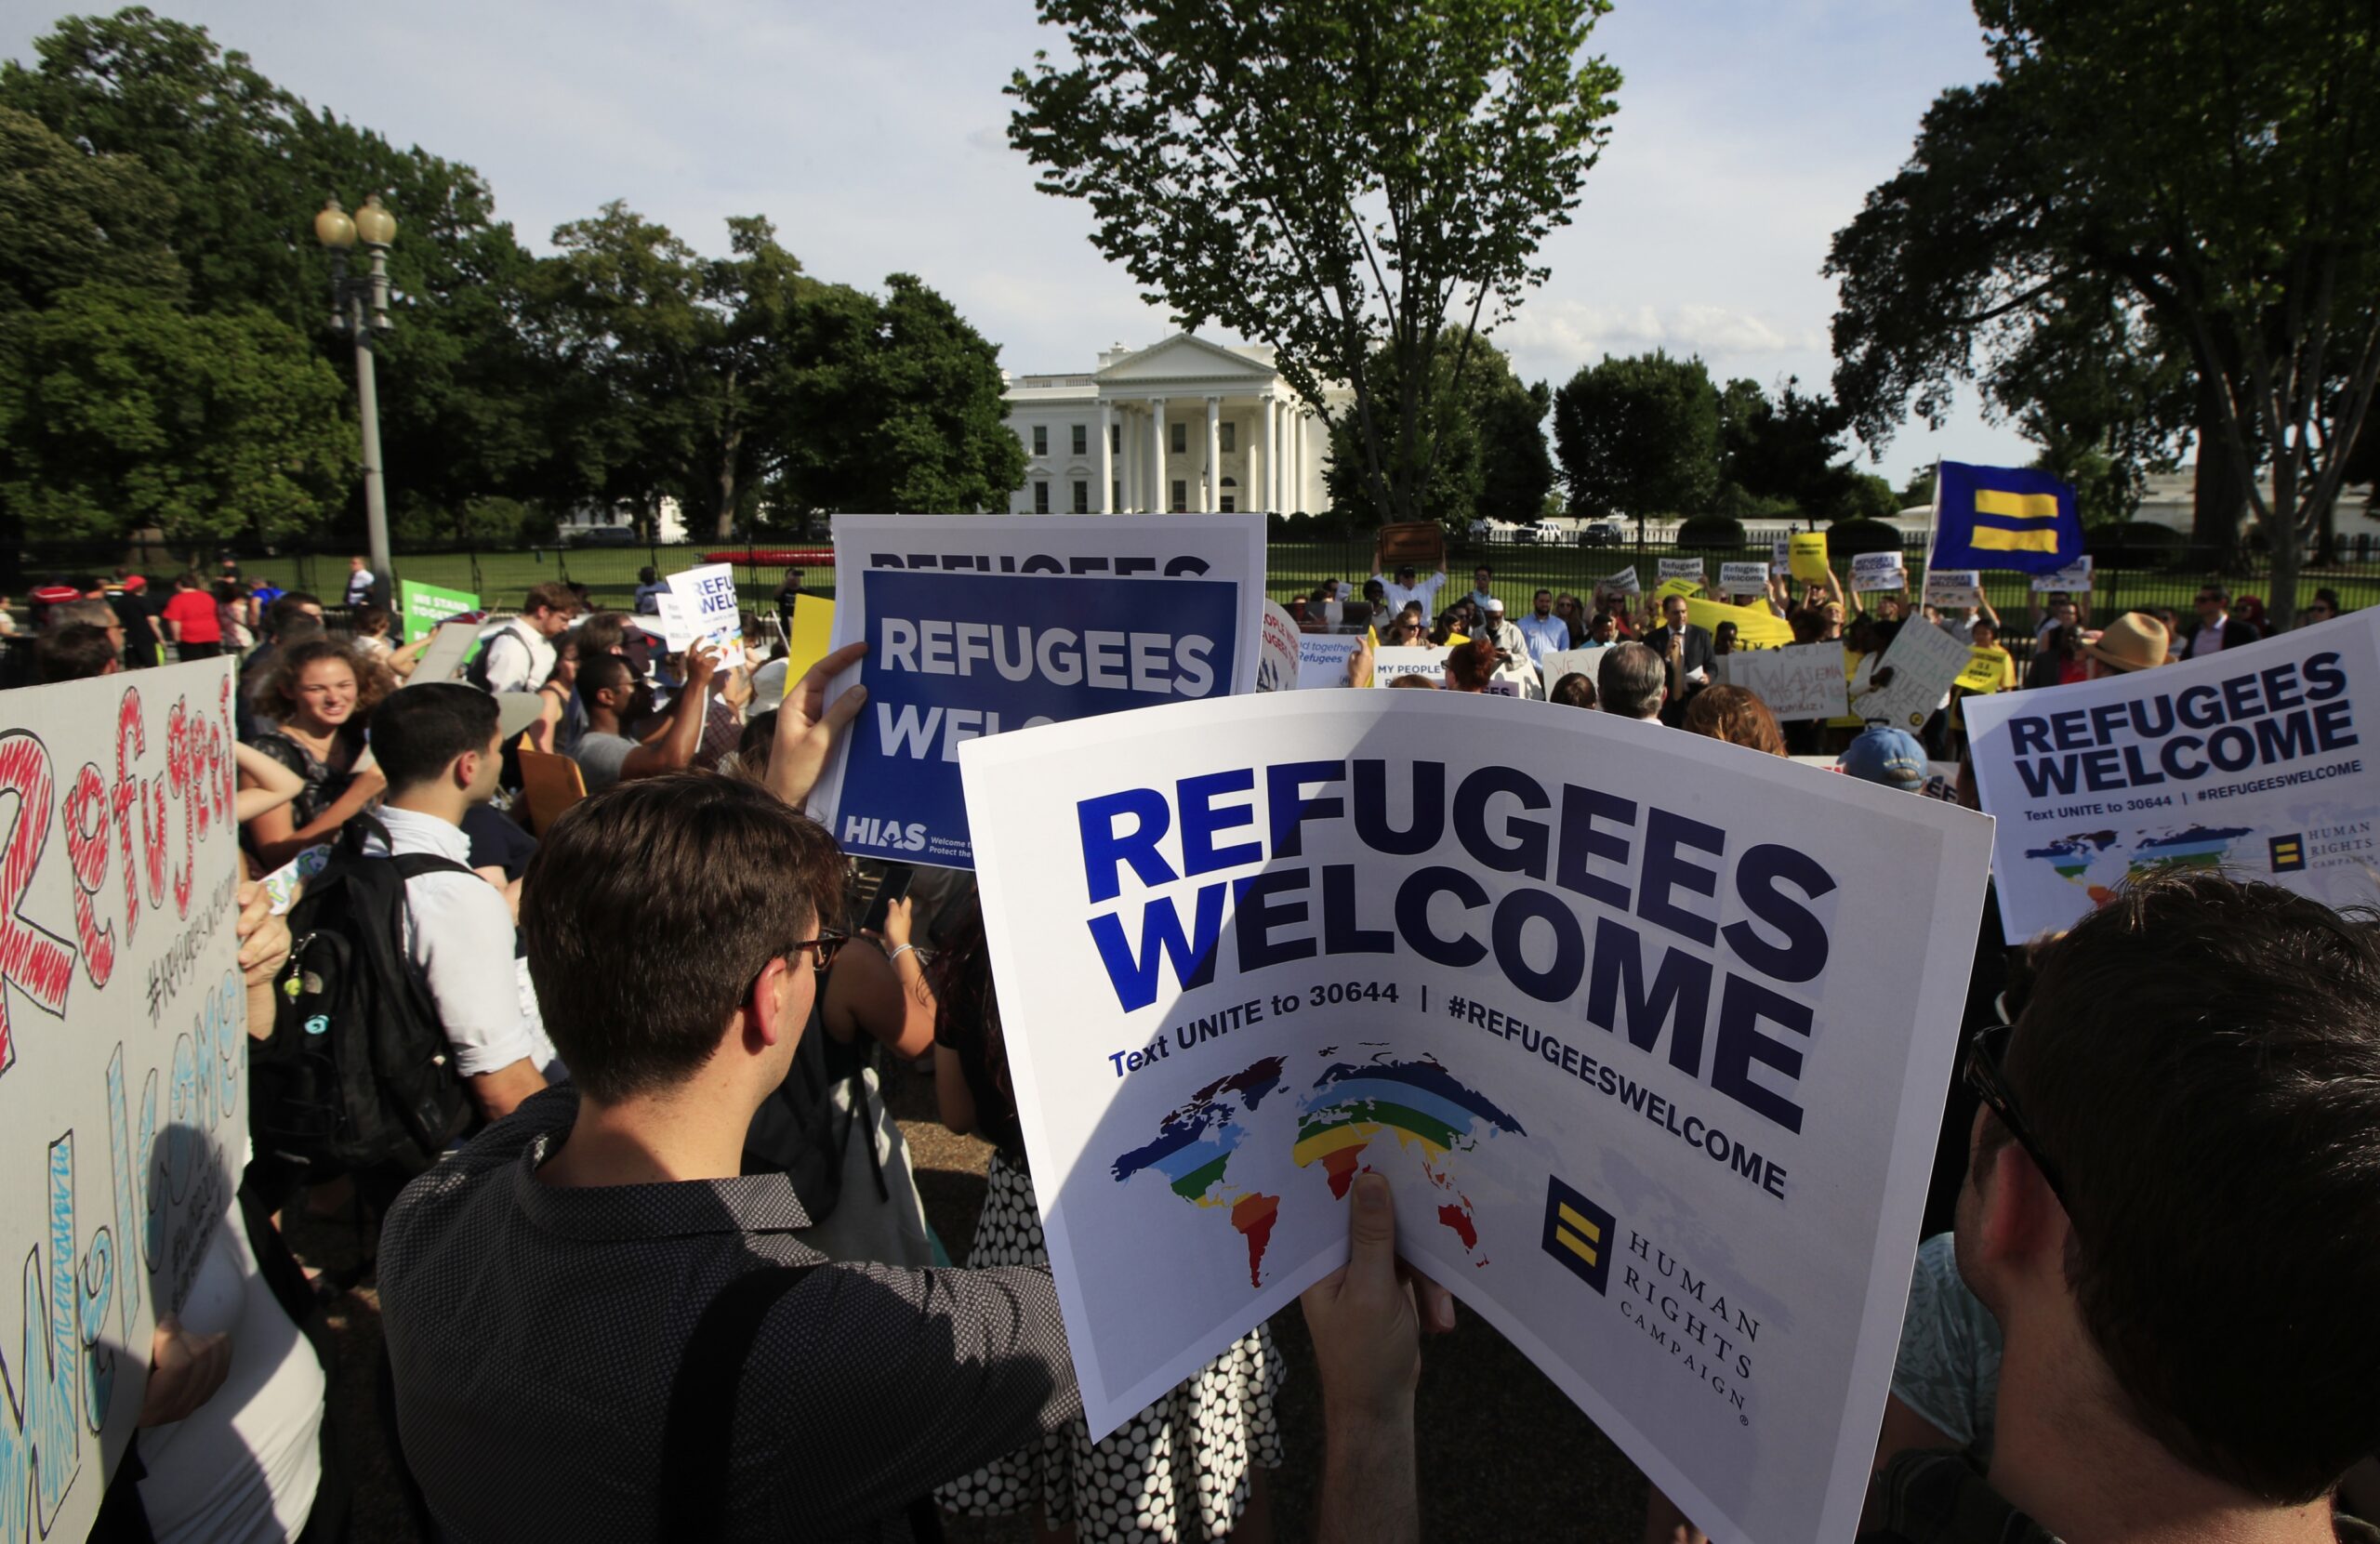 Protests over refugee limitations